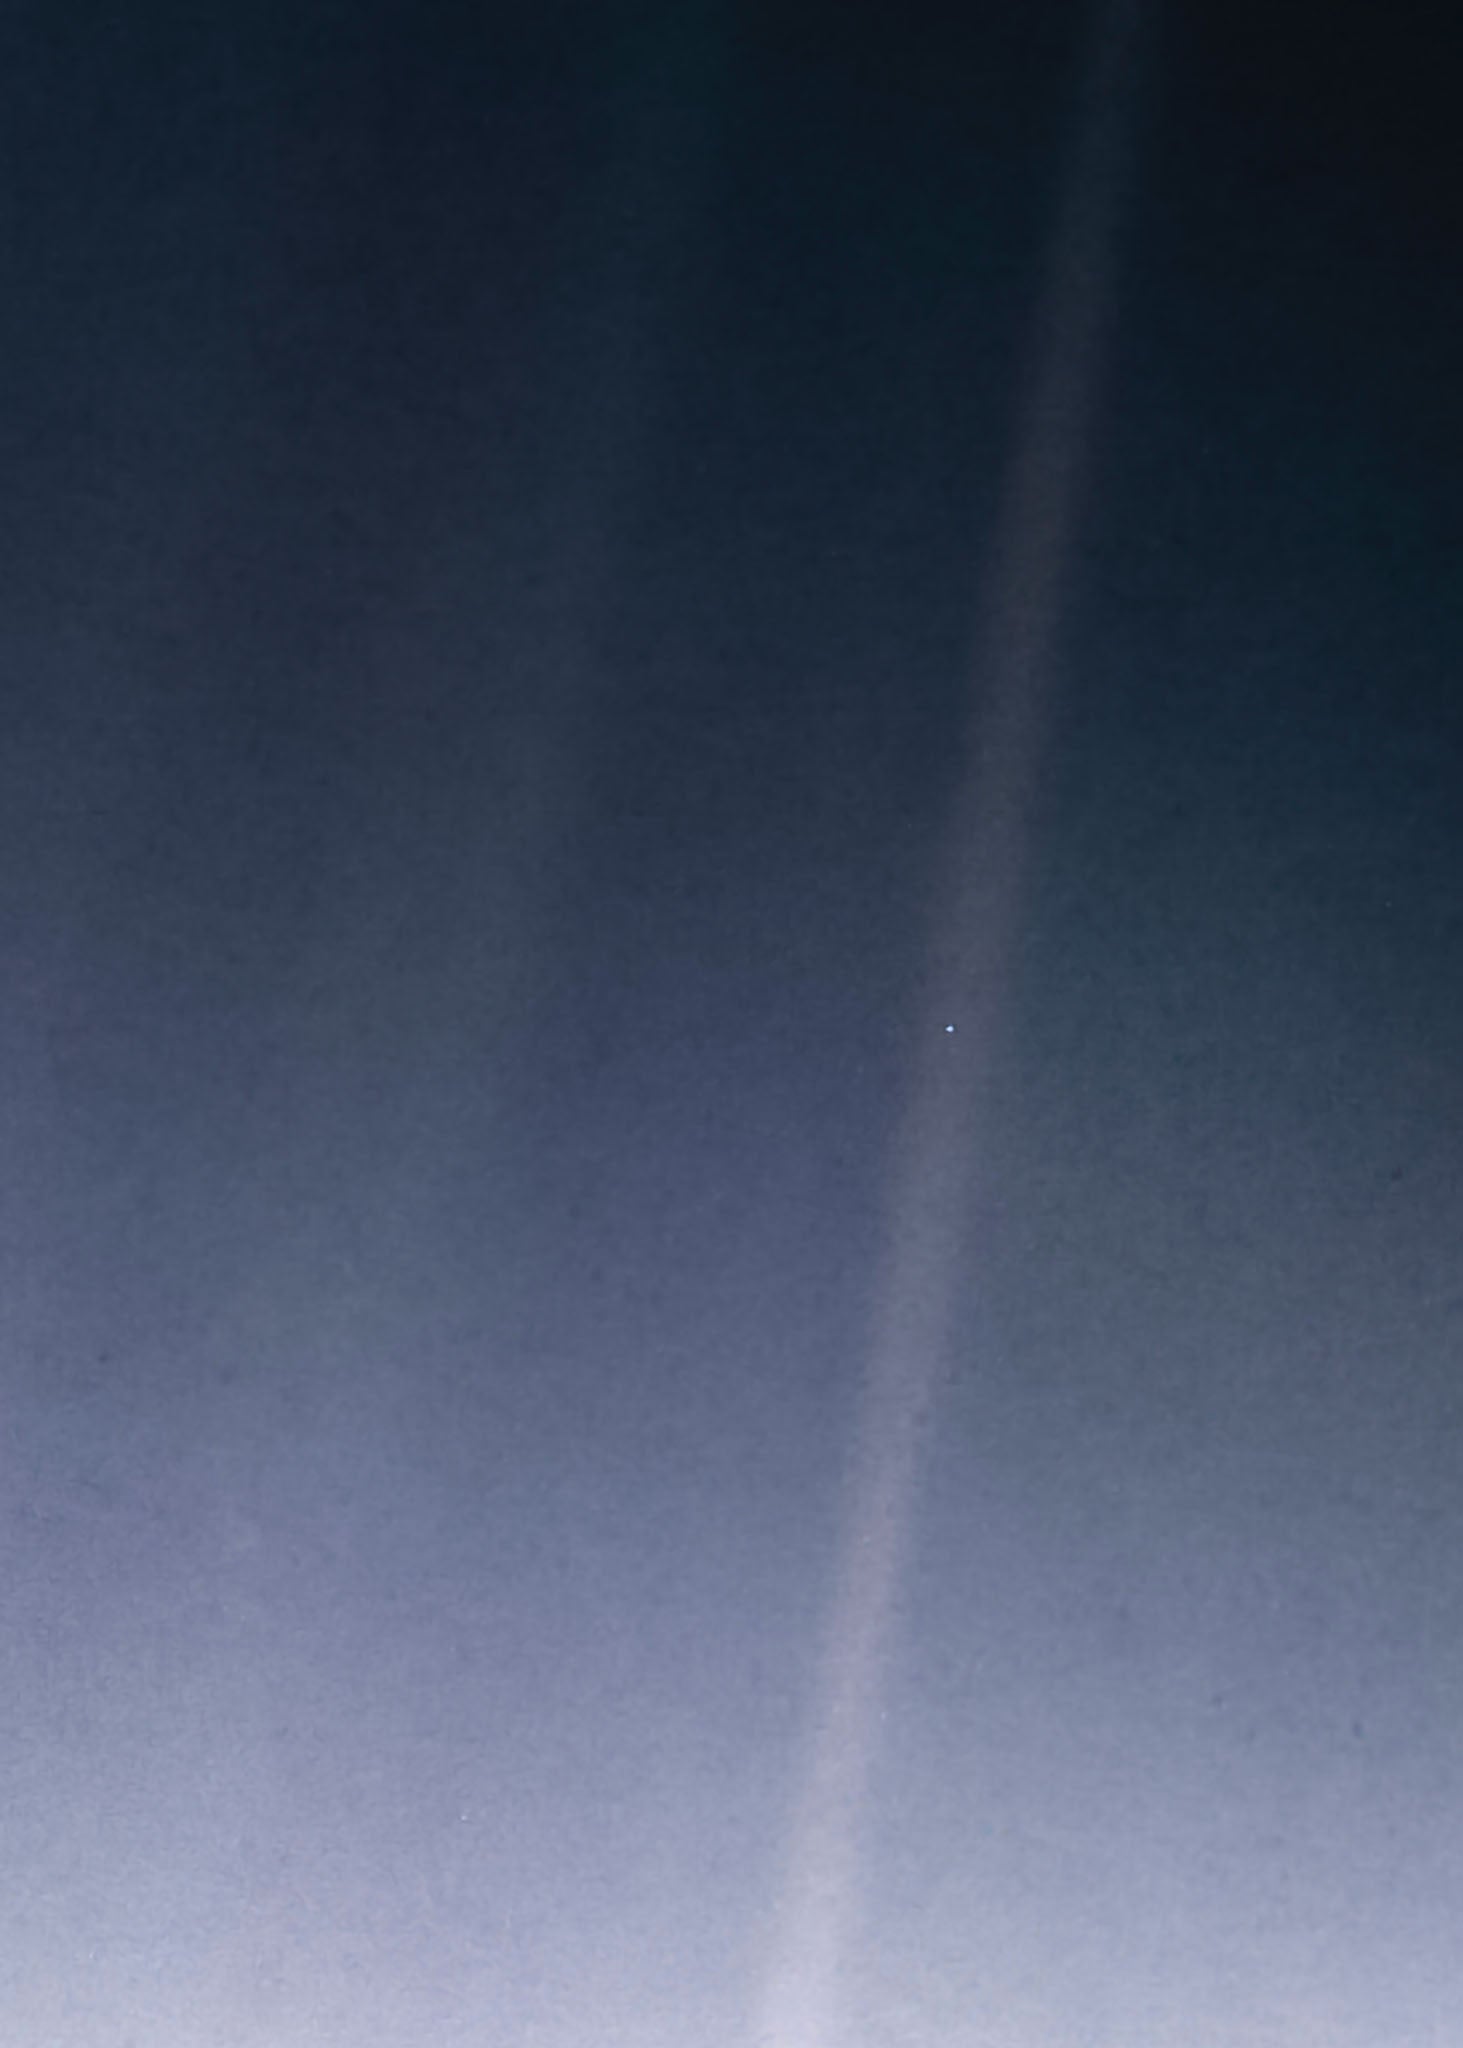 Pale Blue Dot - Voyager 1 